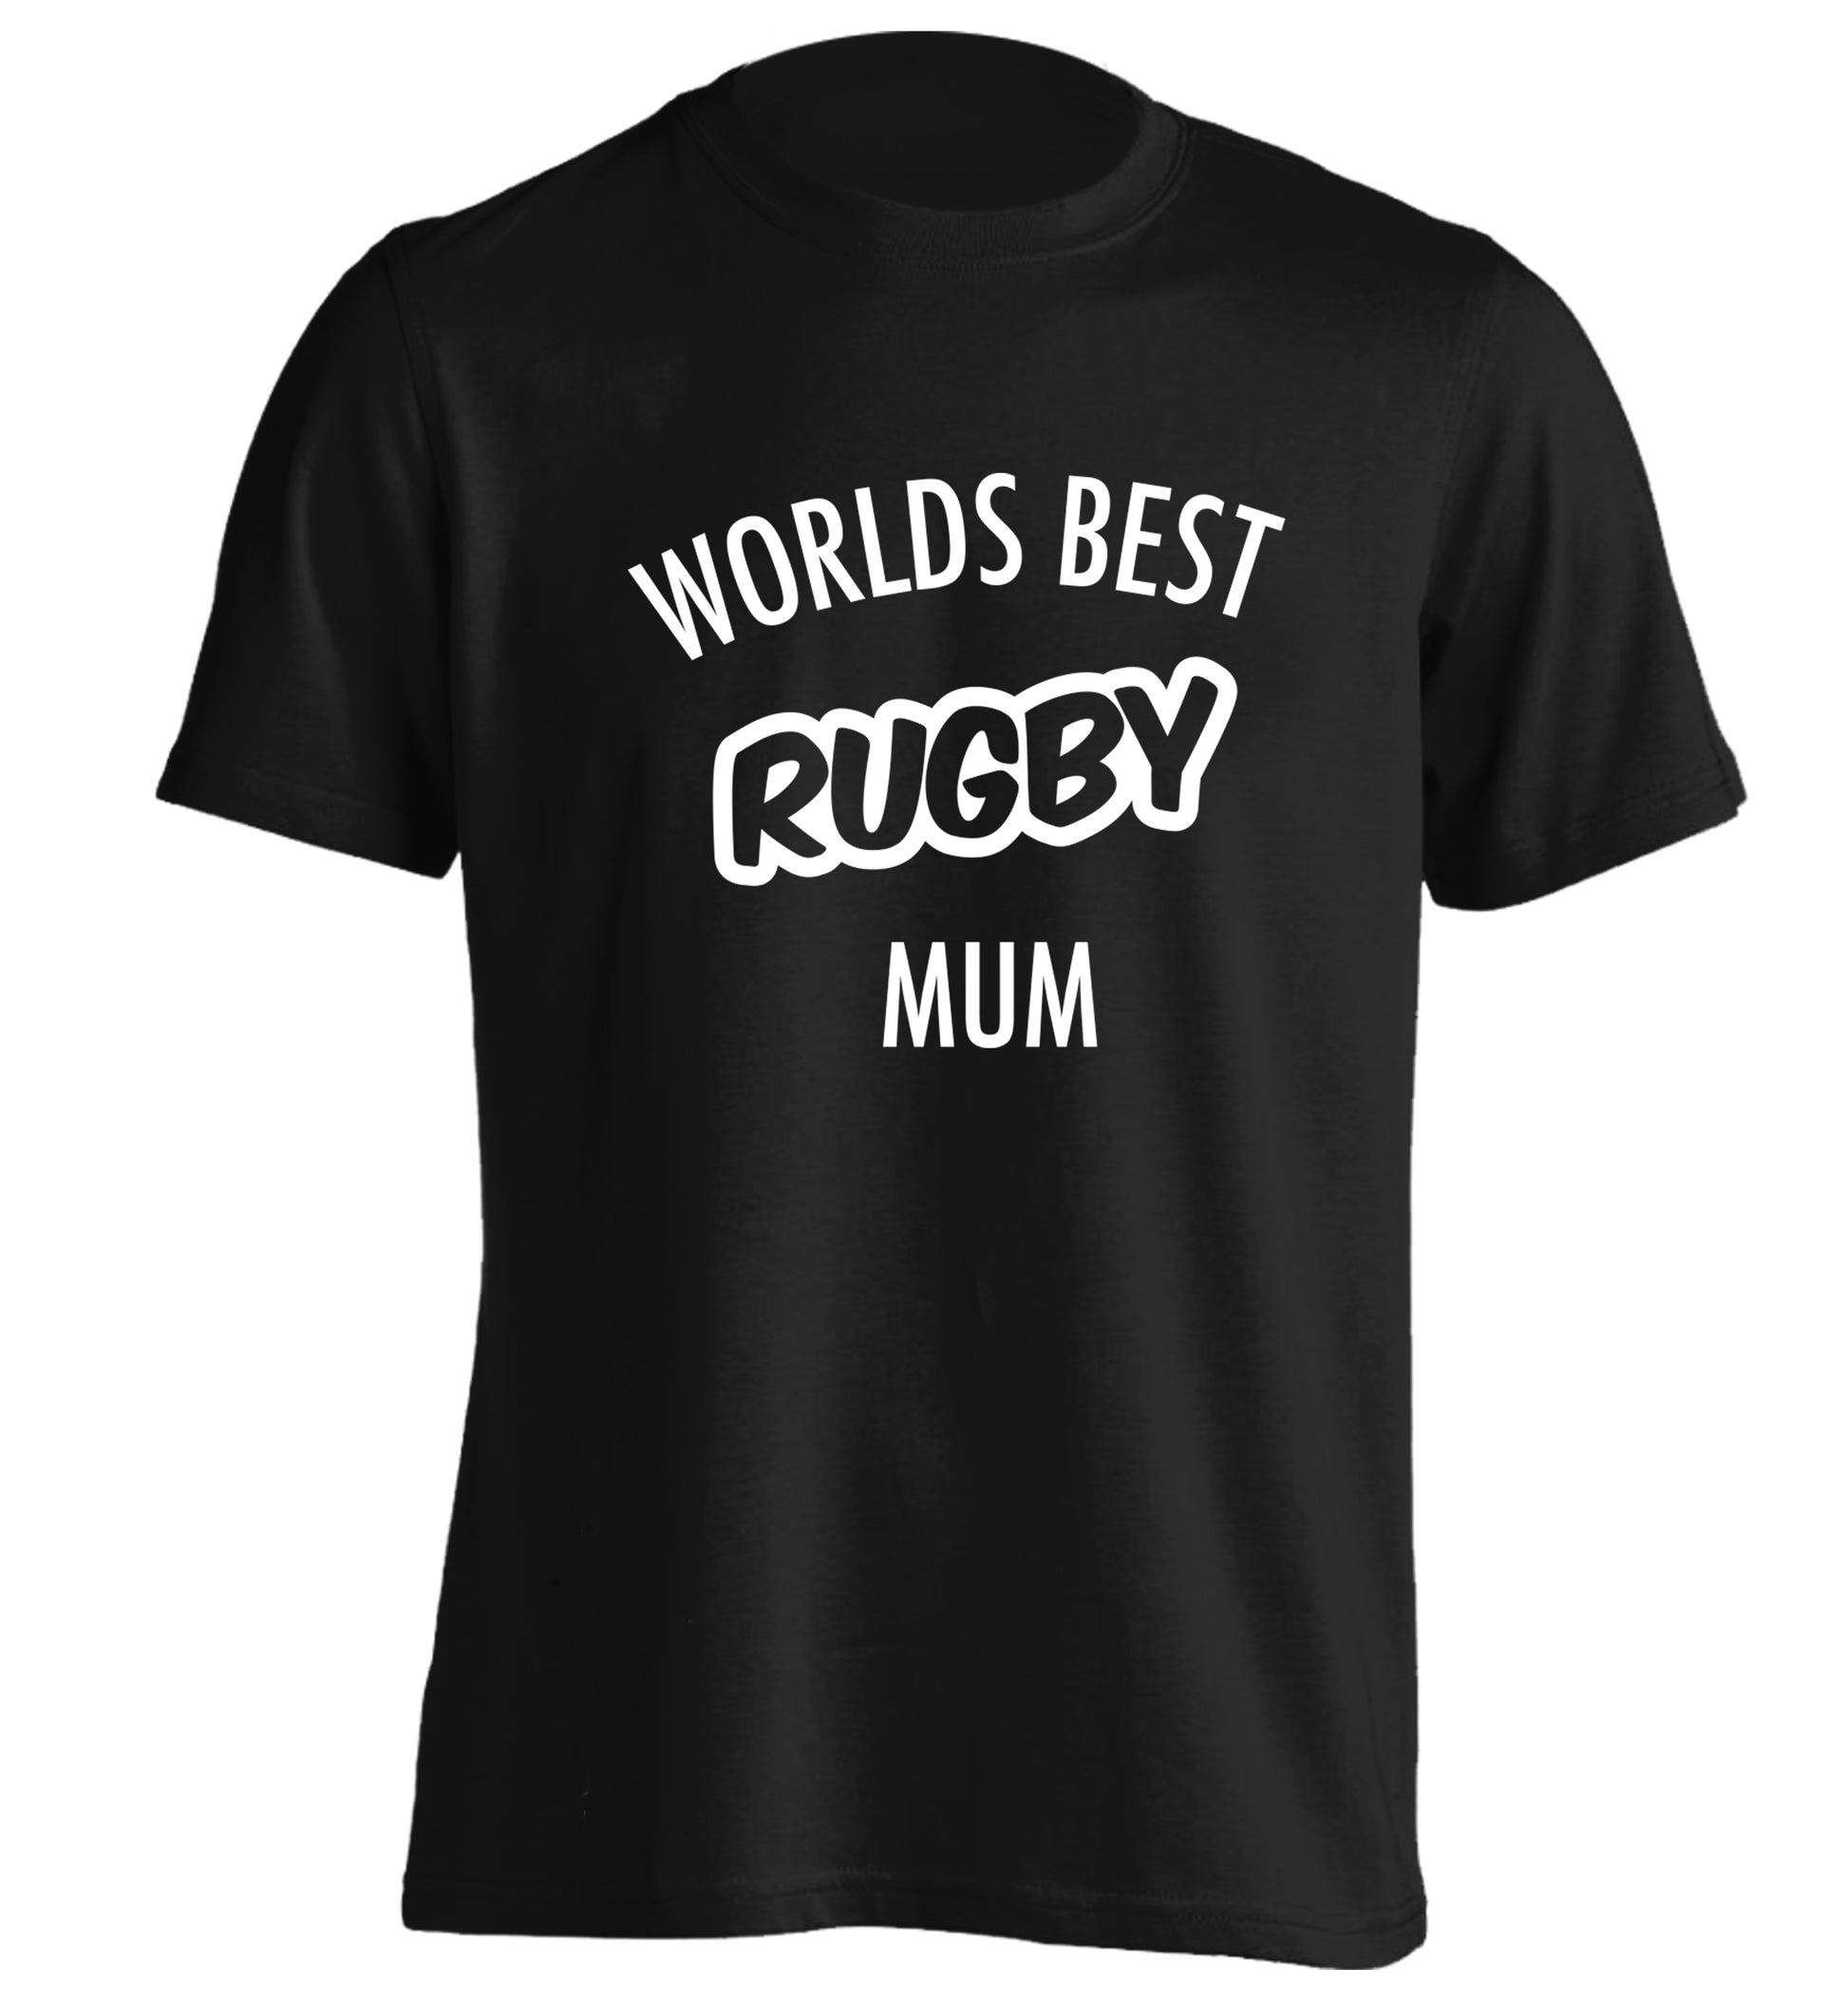 Worlds best rugby mum adults unisex black Tshirt 2XL